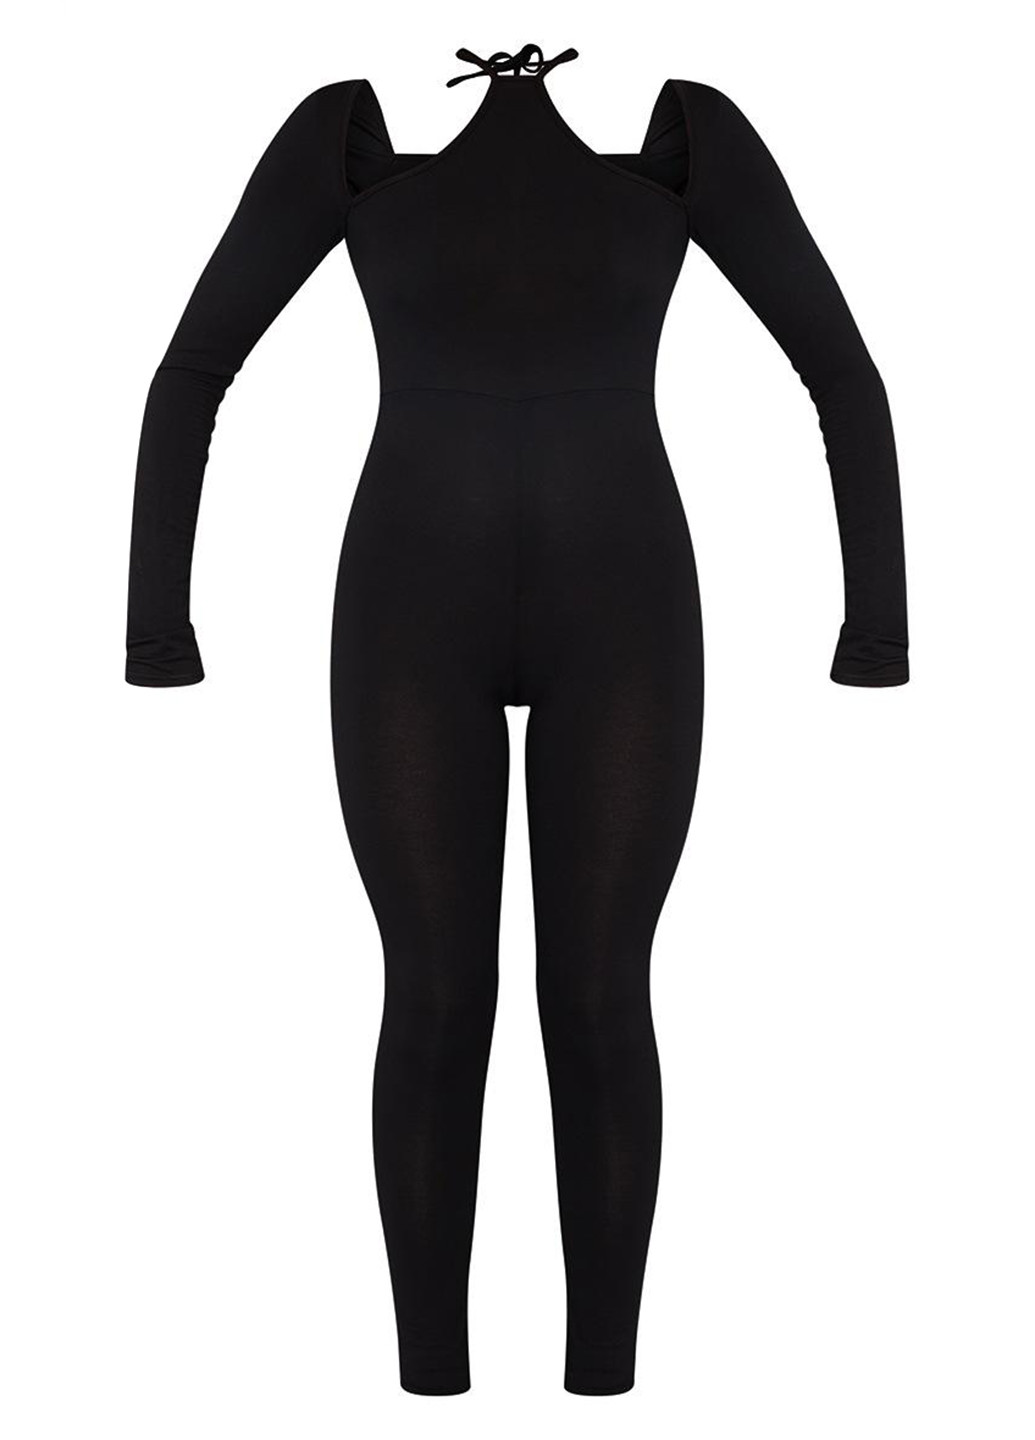 Комбинезон PrettyLittleThing комбинезон-брюки однотонный чёрный кэжуал вискоза